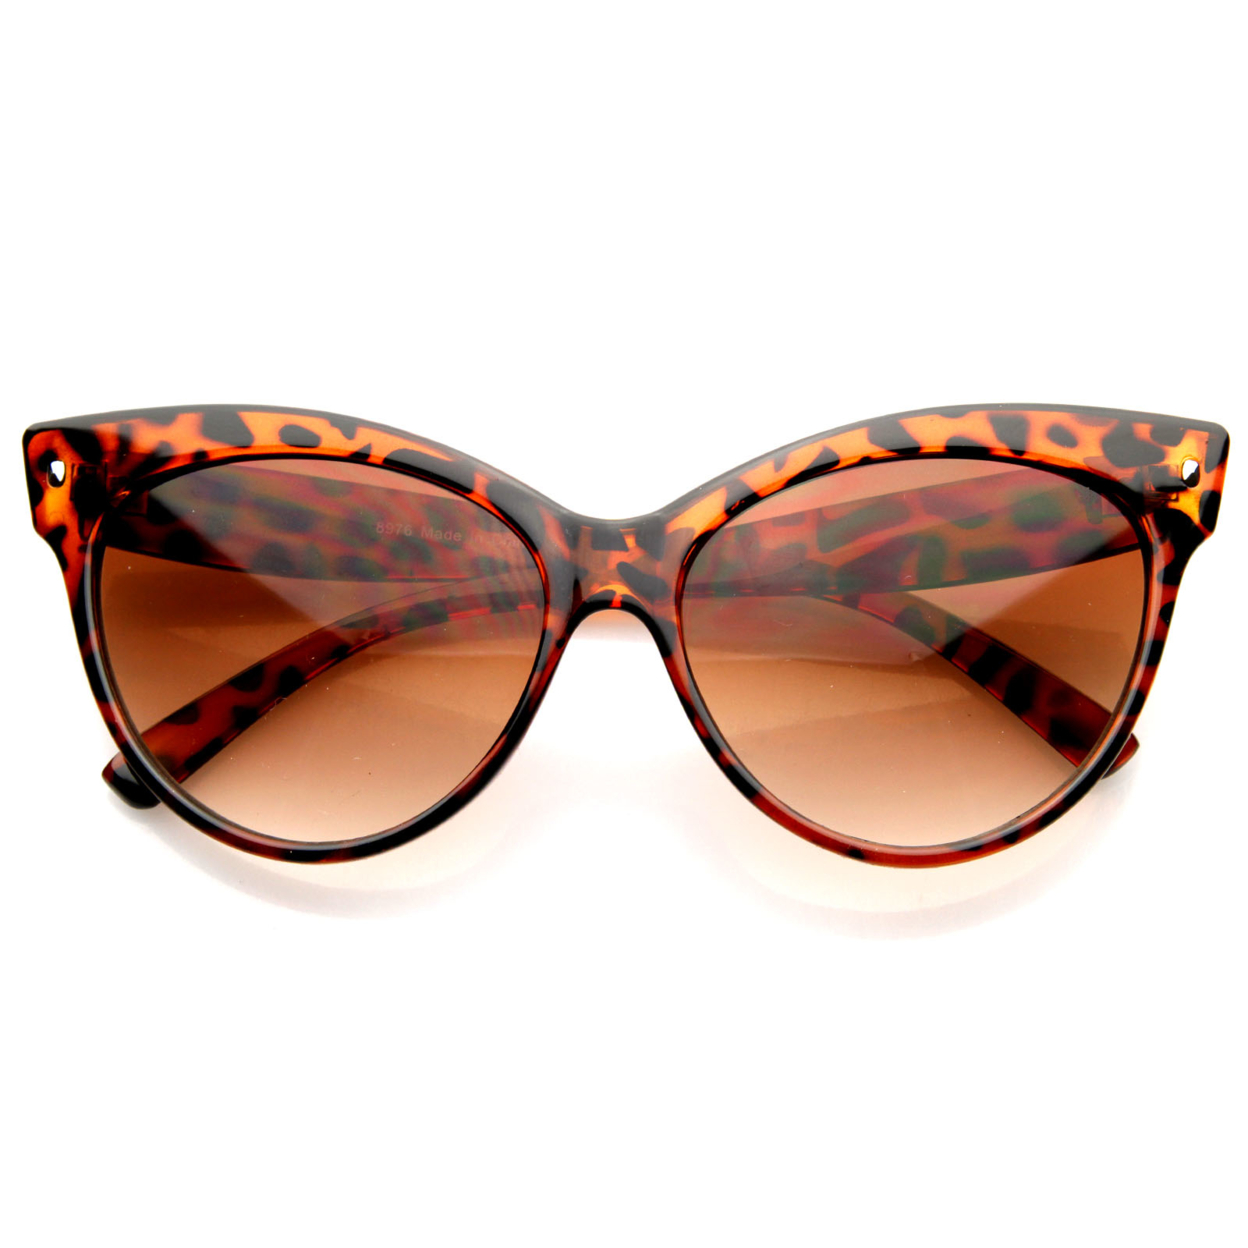 High Pointed Vintage Mod Womens Fashion Cat Eye Sunglasses - 8462 - Tortoise